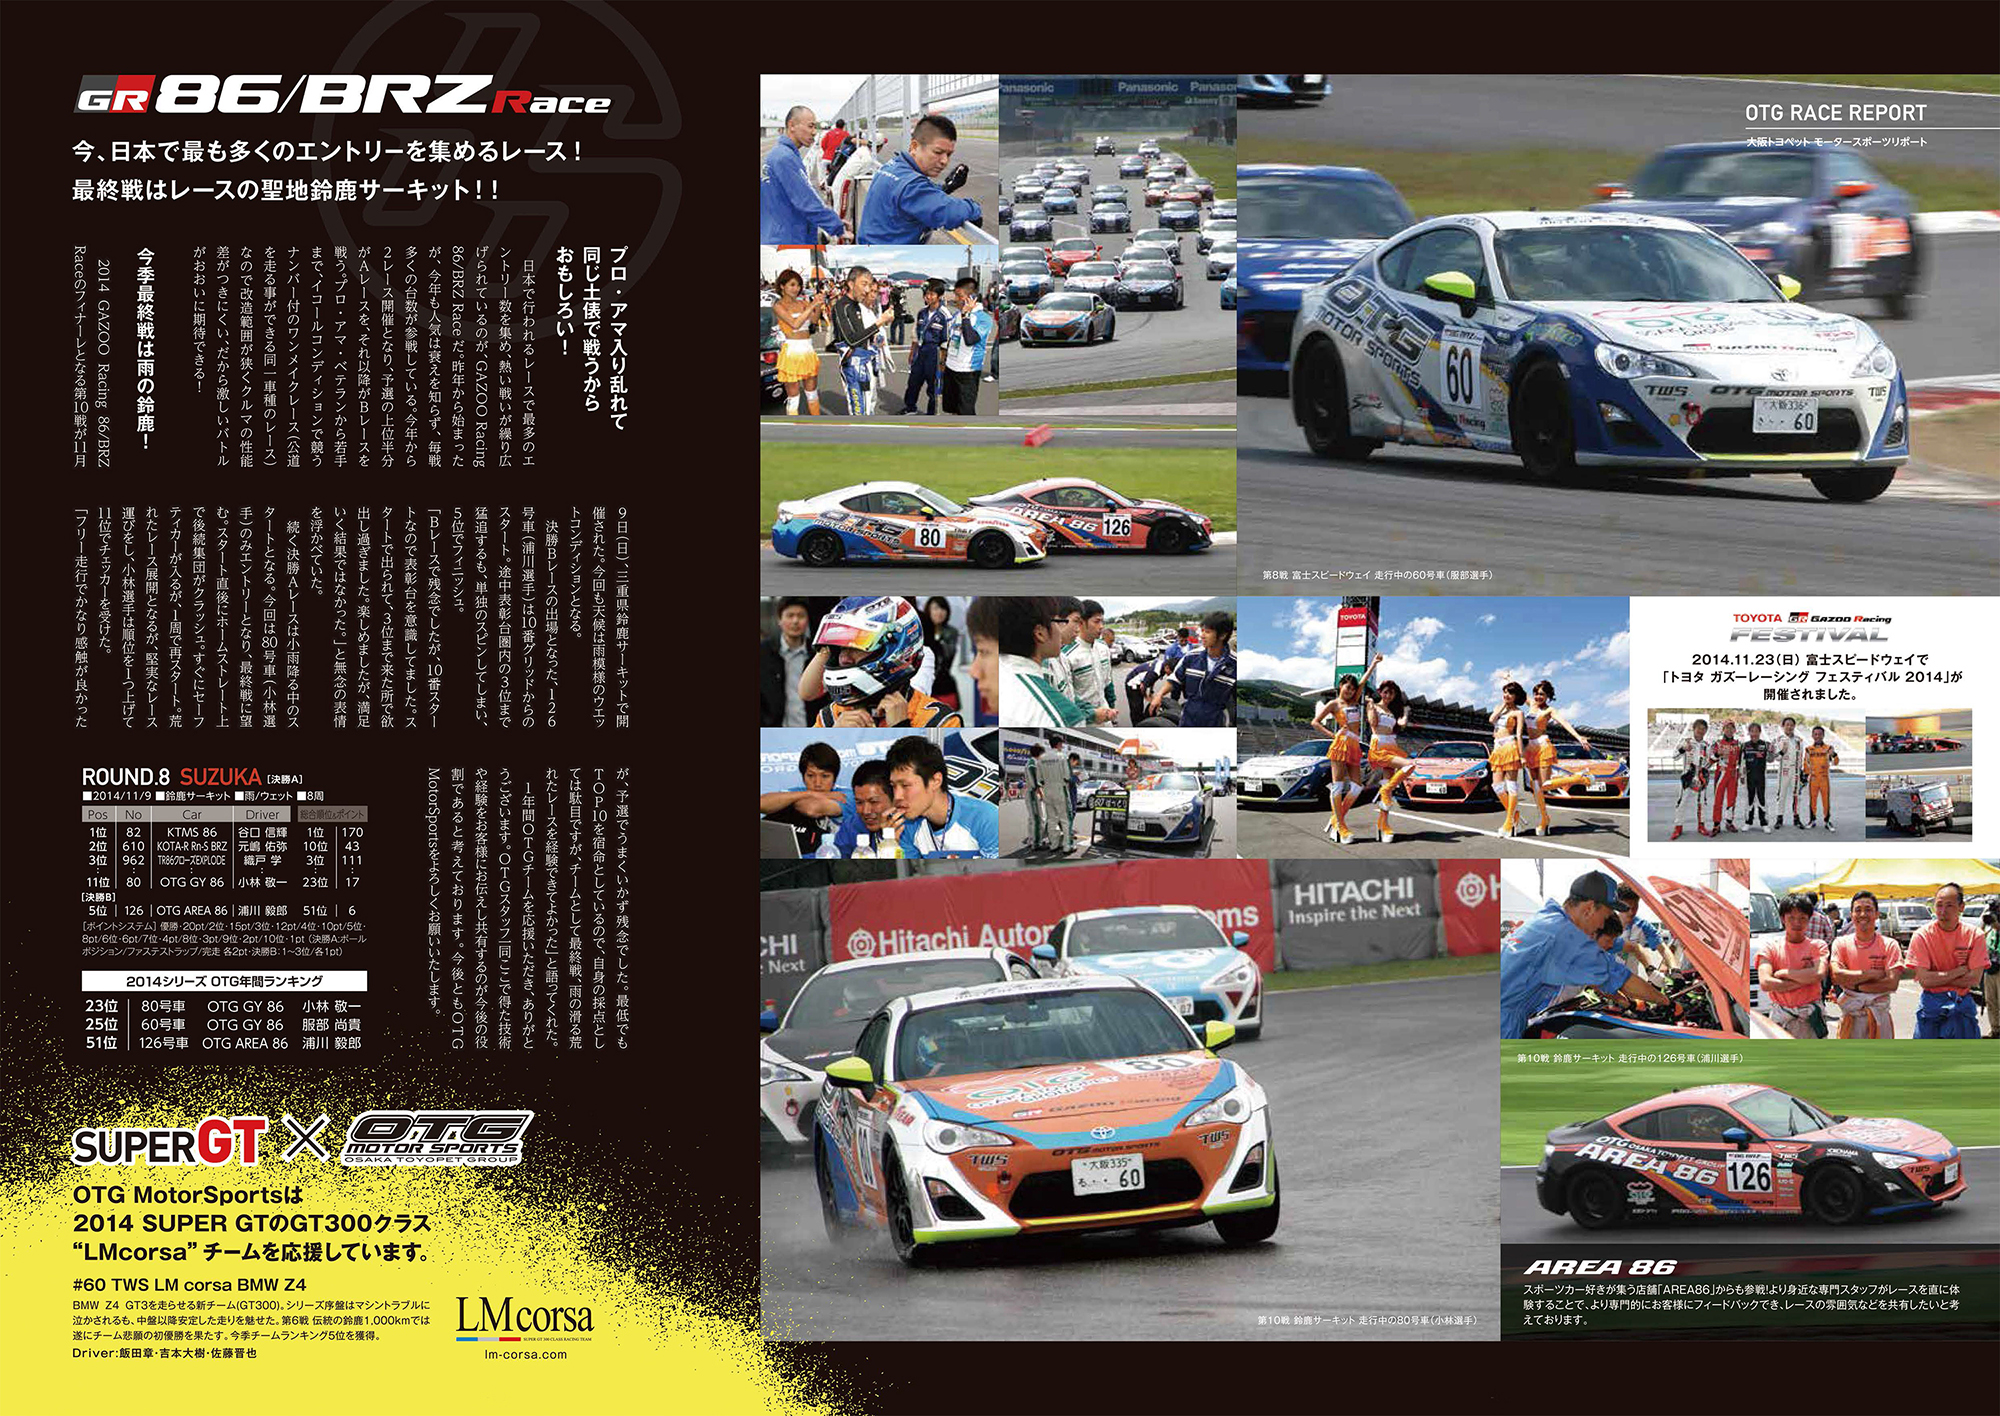 http://www.osaka-toyopet.jp/otg-ms/86brz_race/img/motorsports1412.jpg